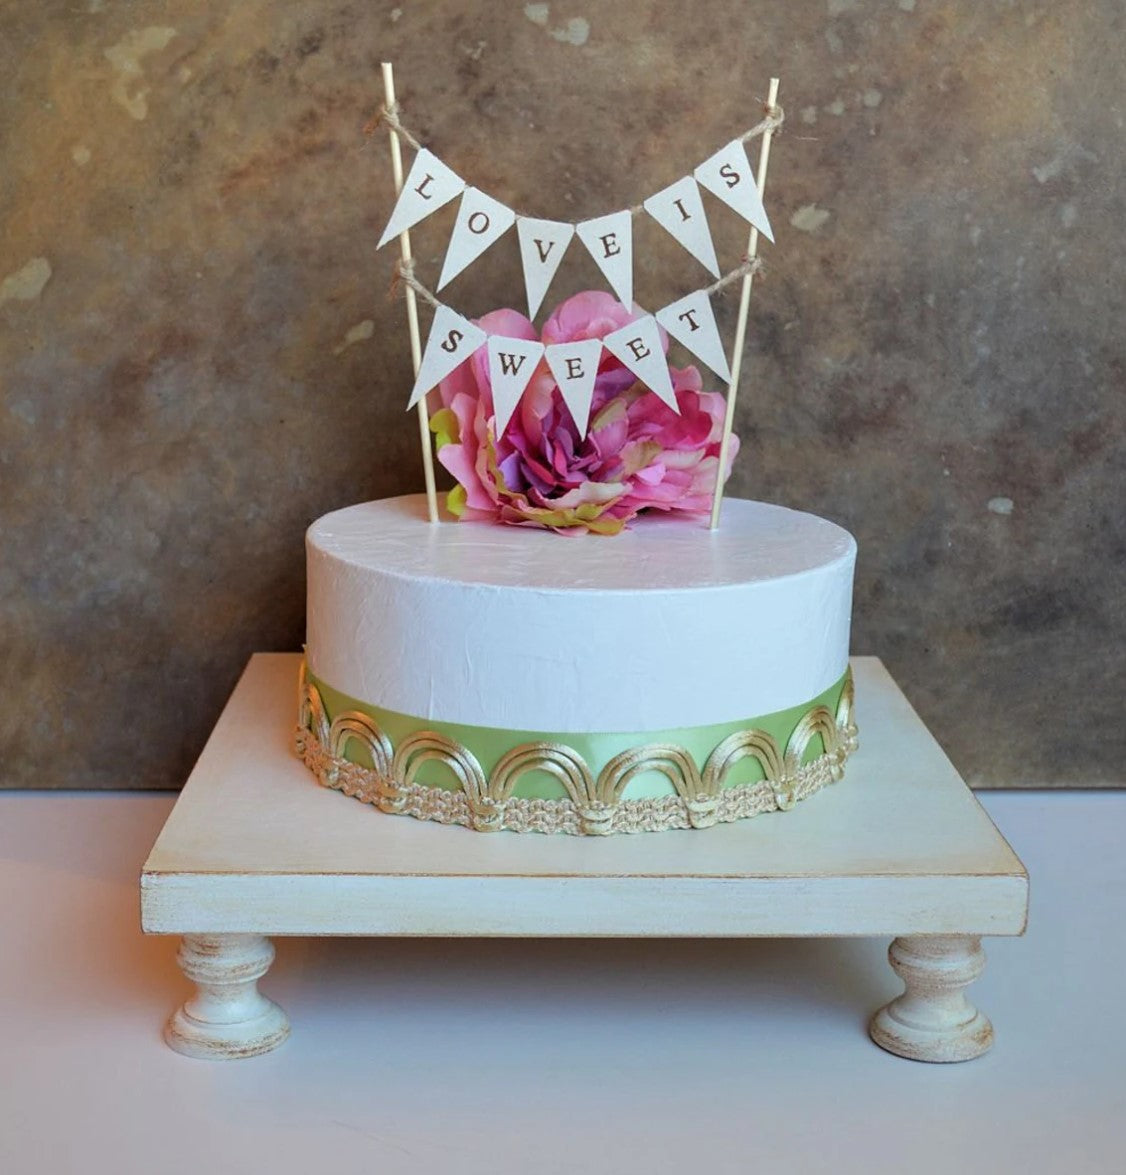 Wedding cake stand / cake pedestal / cupcake stand / dessert table decor / white rustic cake stand / 16" square cake display